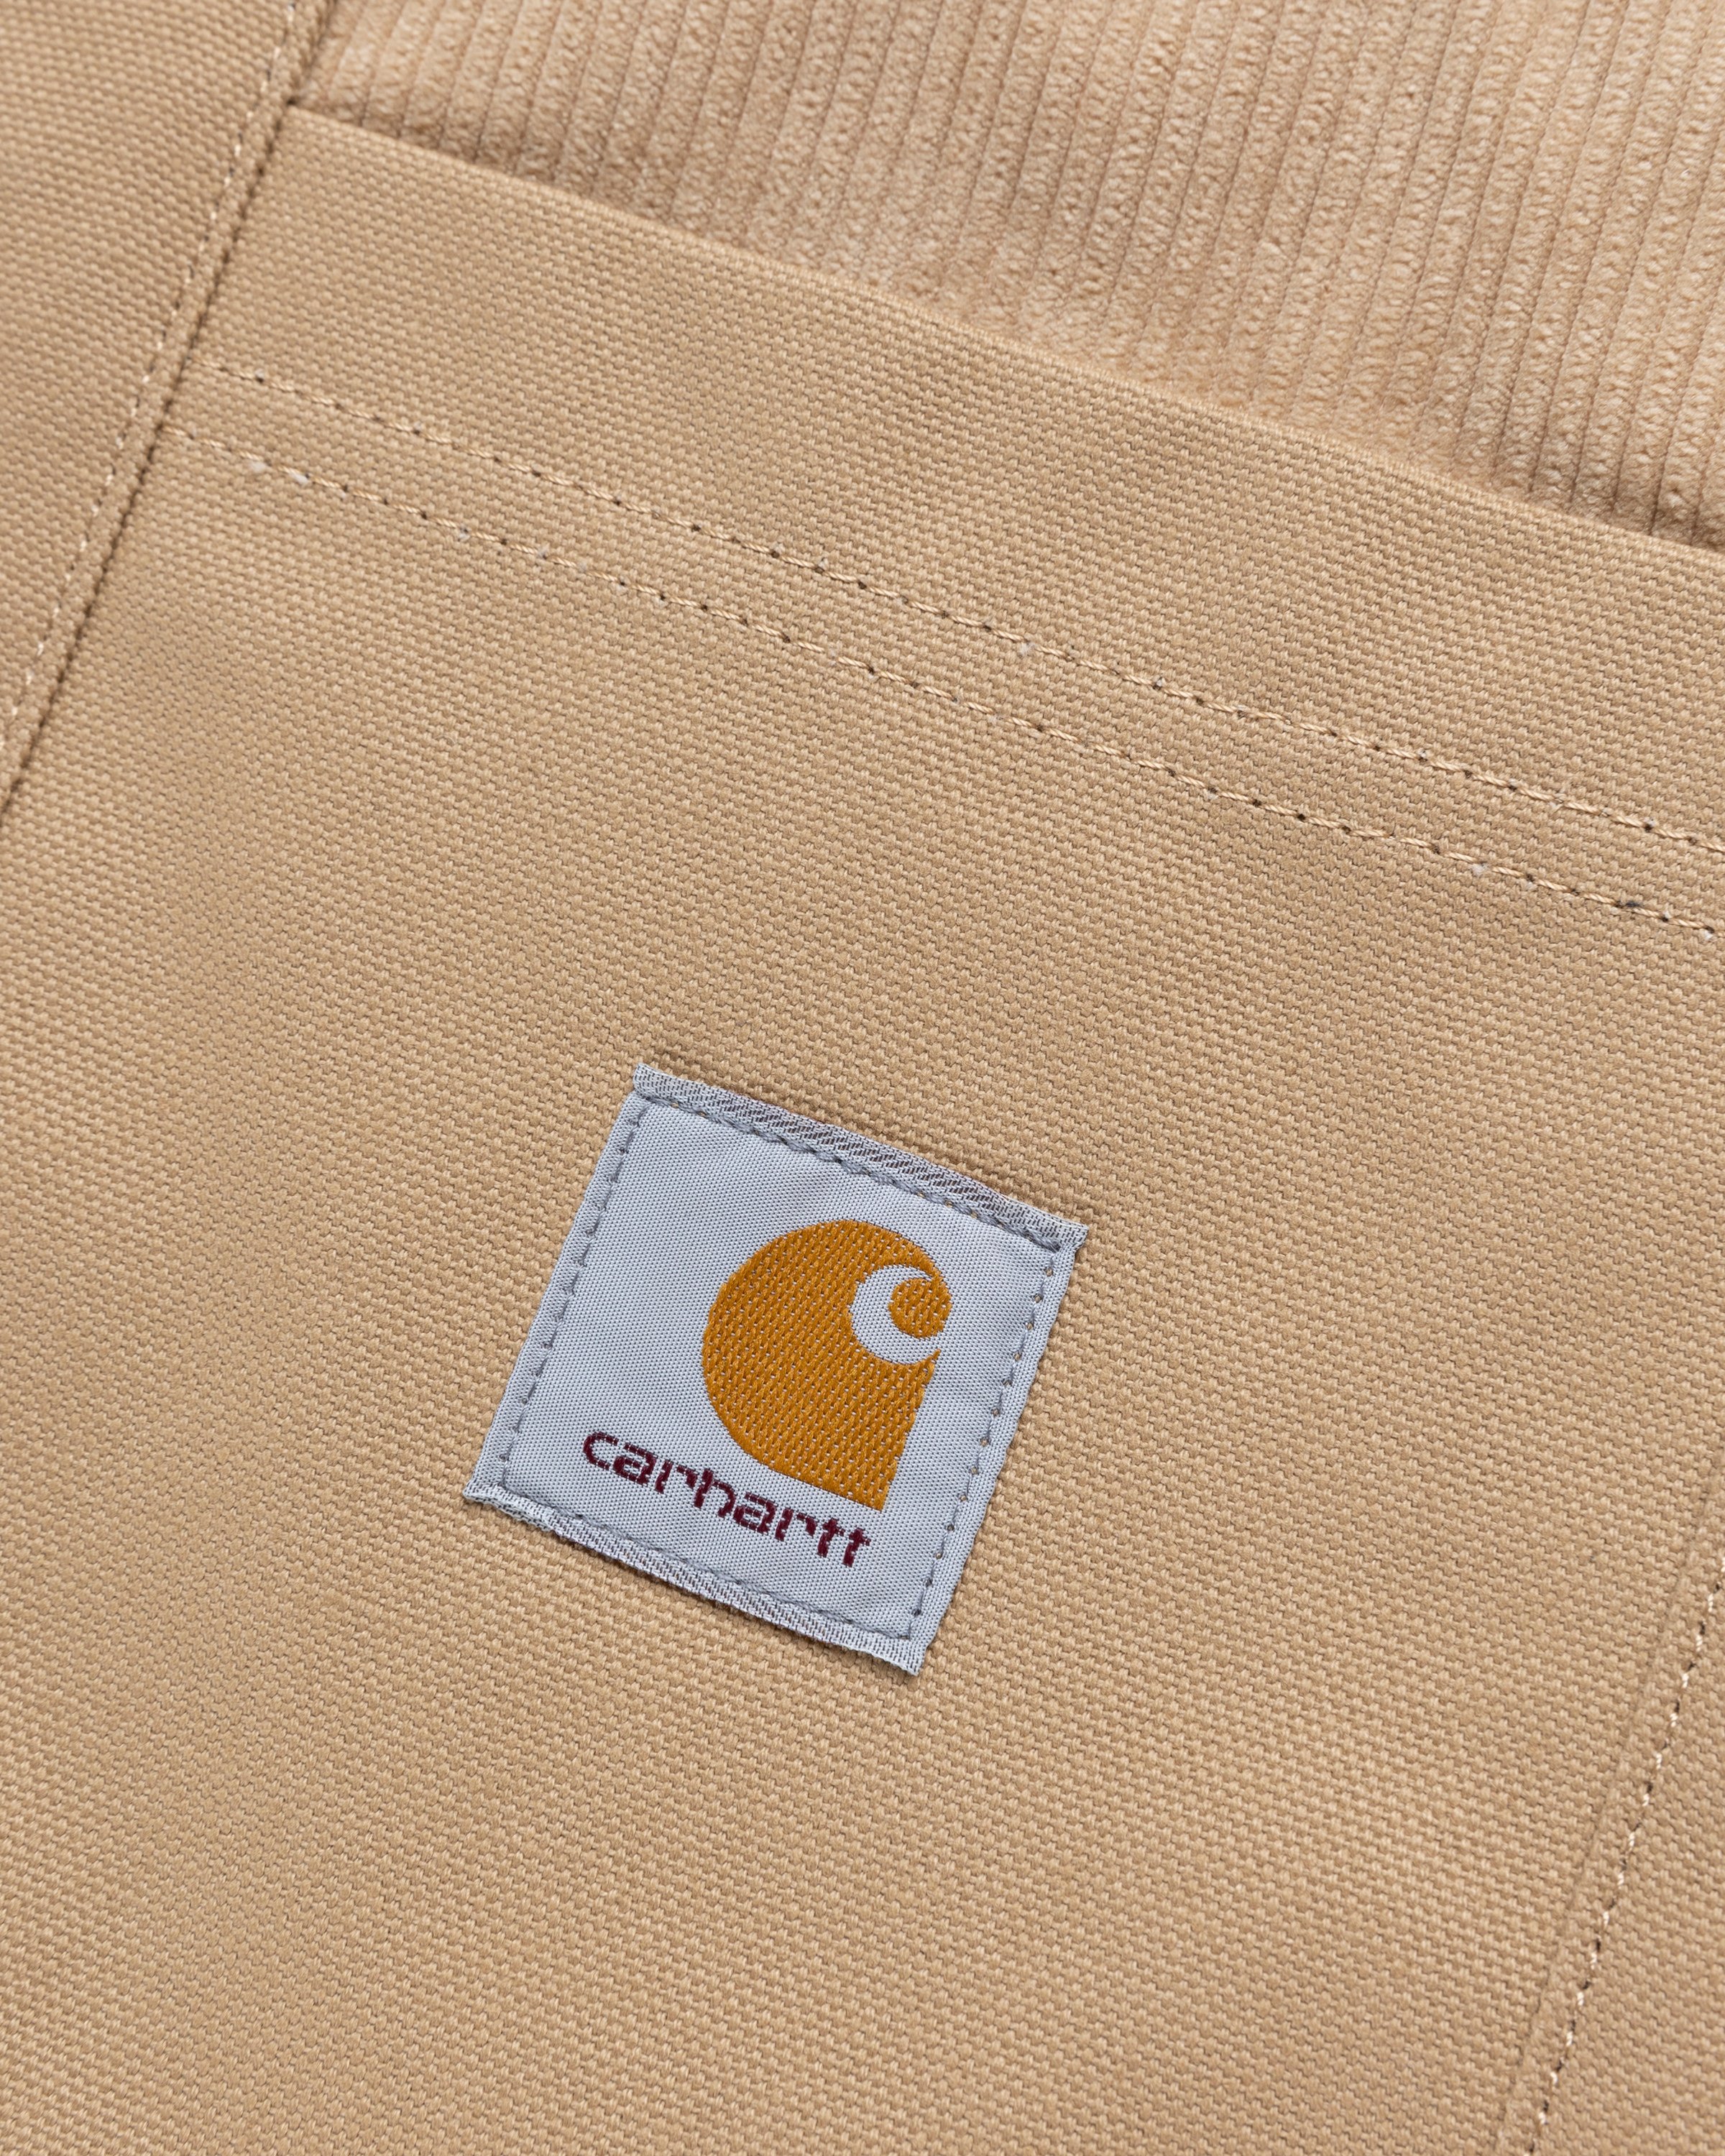 Carhartt WIP – Medley Tote Bag Dusty Hamilton Brown | Highsnobiety Shop